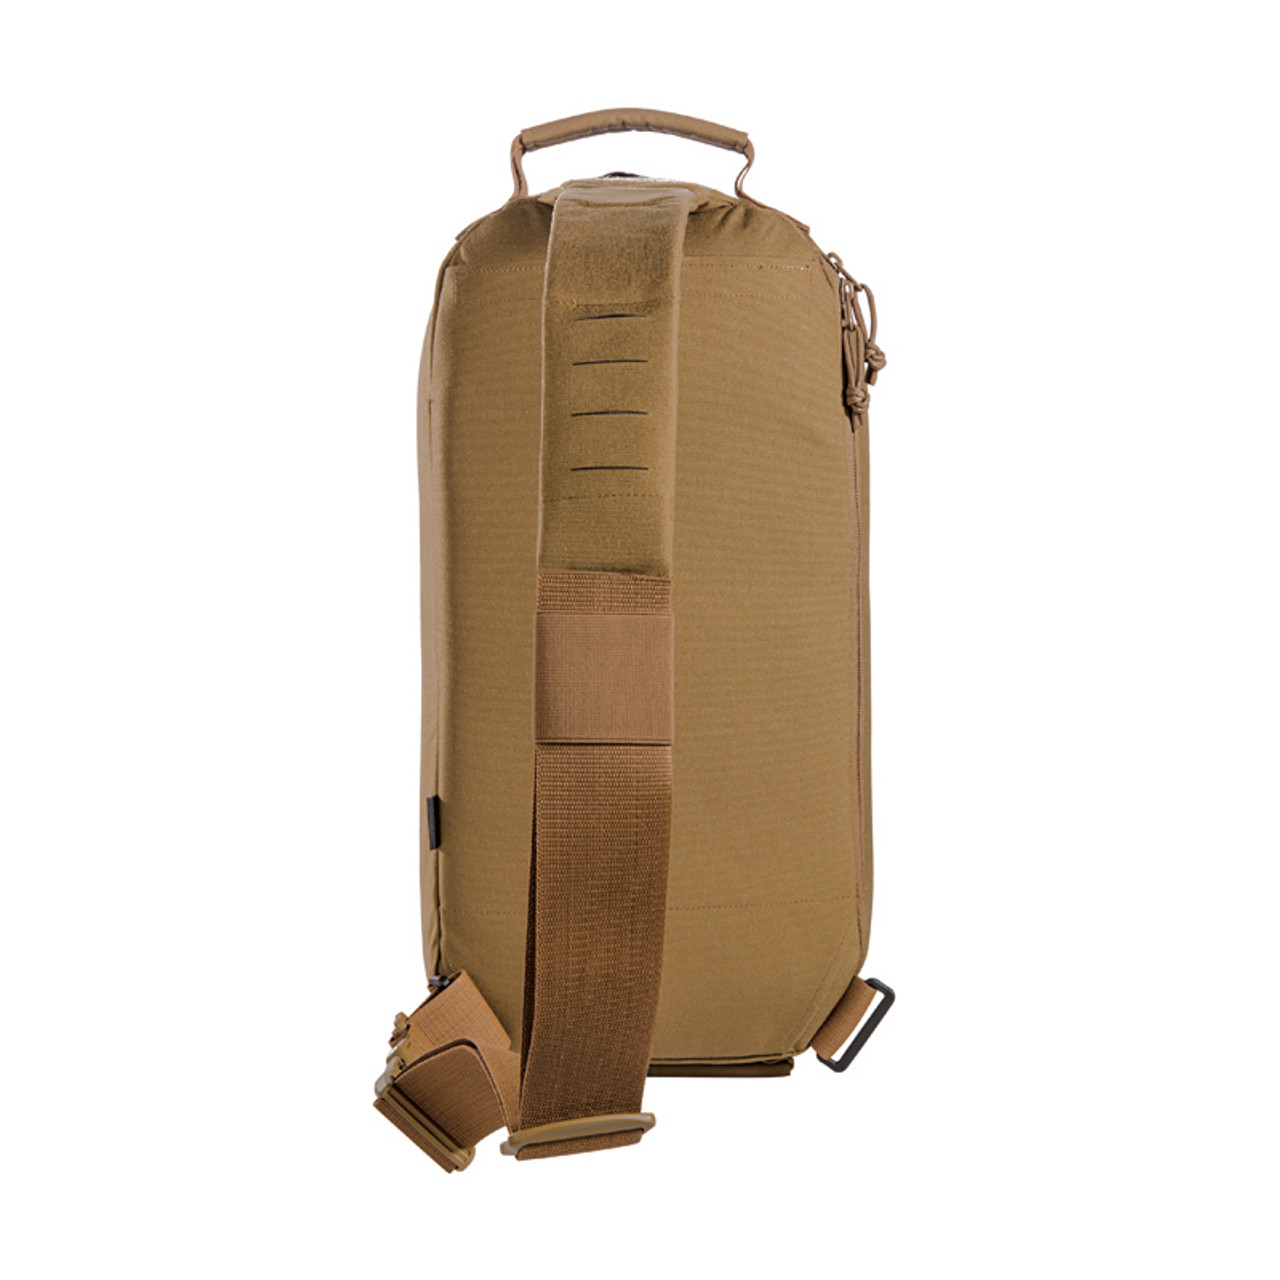 TASMANIAN TIGER TT Modular Support Bag Coyote Brown - 7759.346